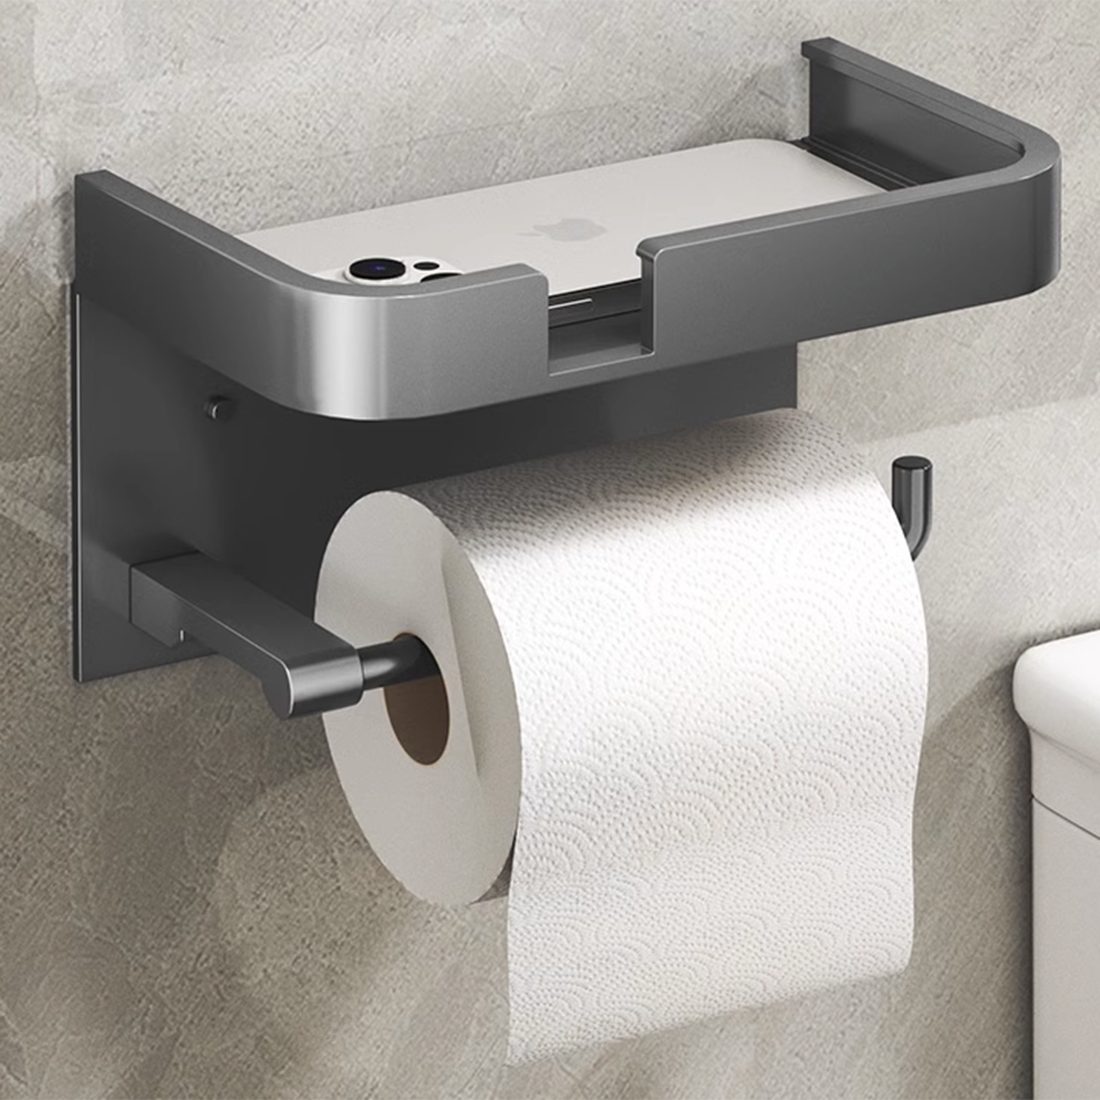 Haiaveng Toilettenpapierhalter ohne Klopapierhalter Ablage, mit Papierhalter Bohren, Toilettenpapierhalter,Toilettenpapierhalter